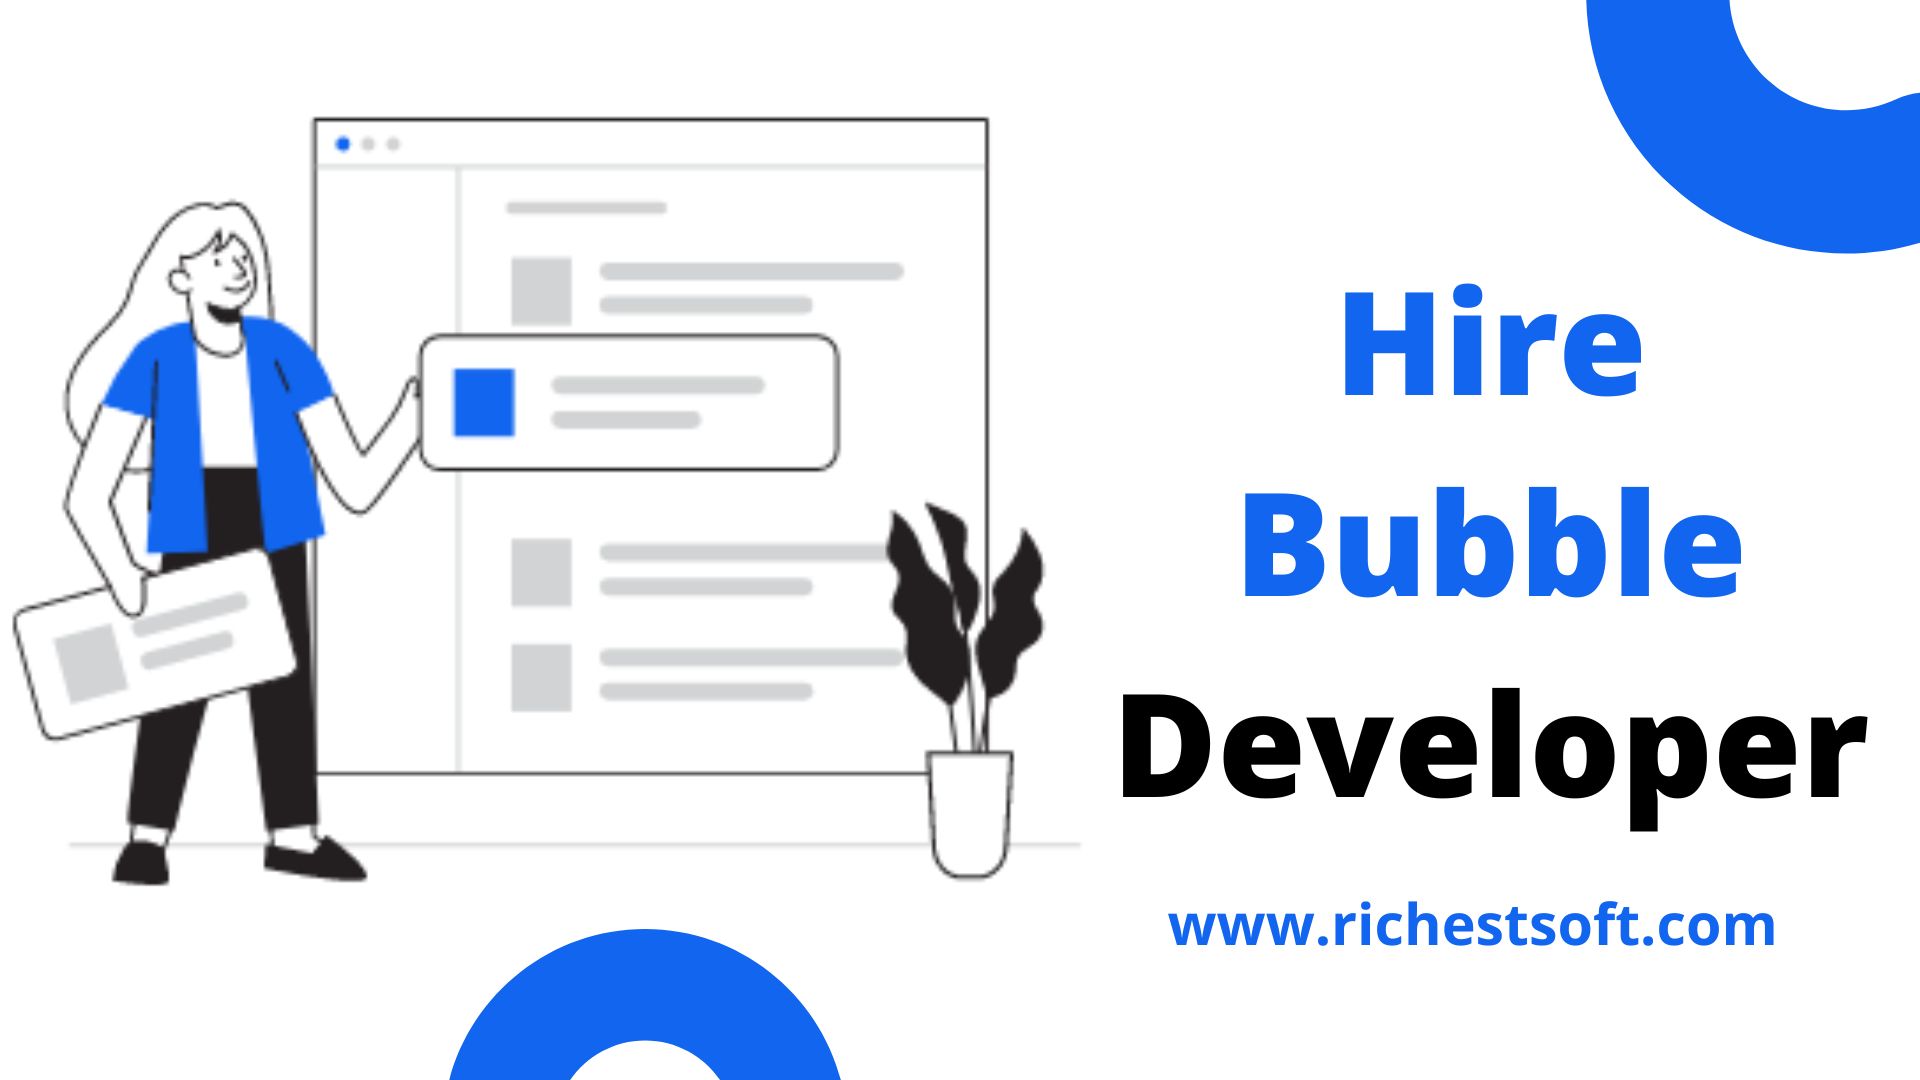 Hire
la Bubble
' Developer

www.richestsoft.com